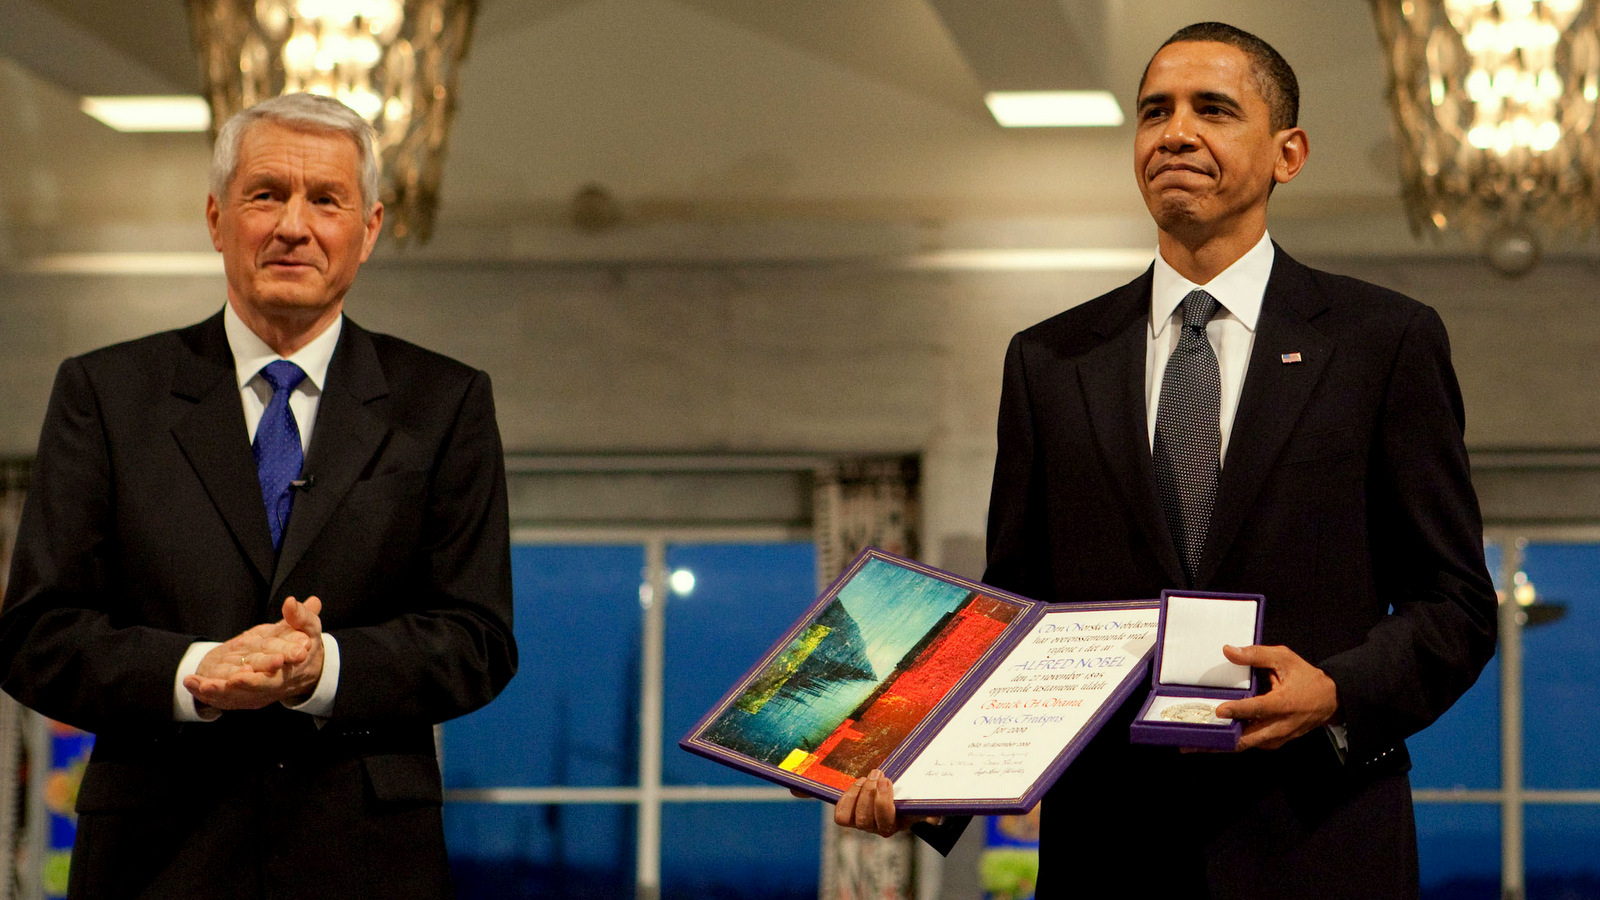 Barack Obama with Thorbjørn Jagland at the 2009 Nobel Peace Prize ceremony. (Official White House Photo by Samantha Appleton)